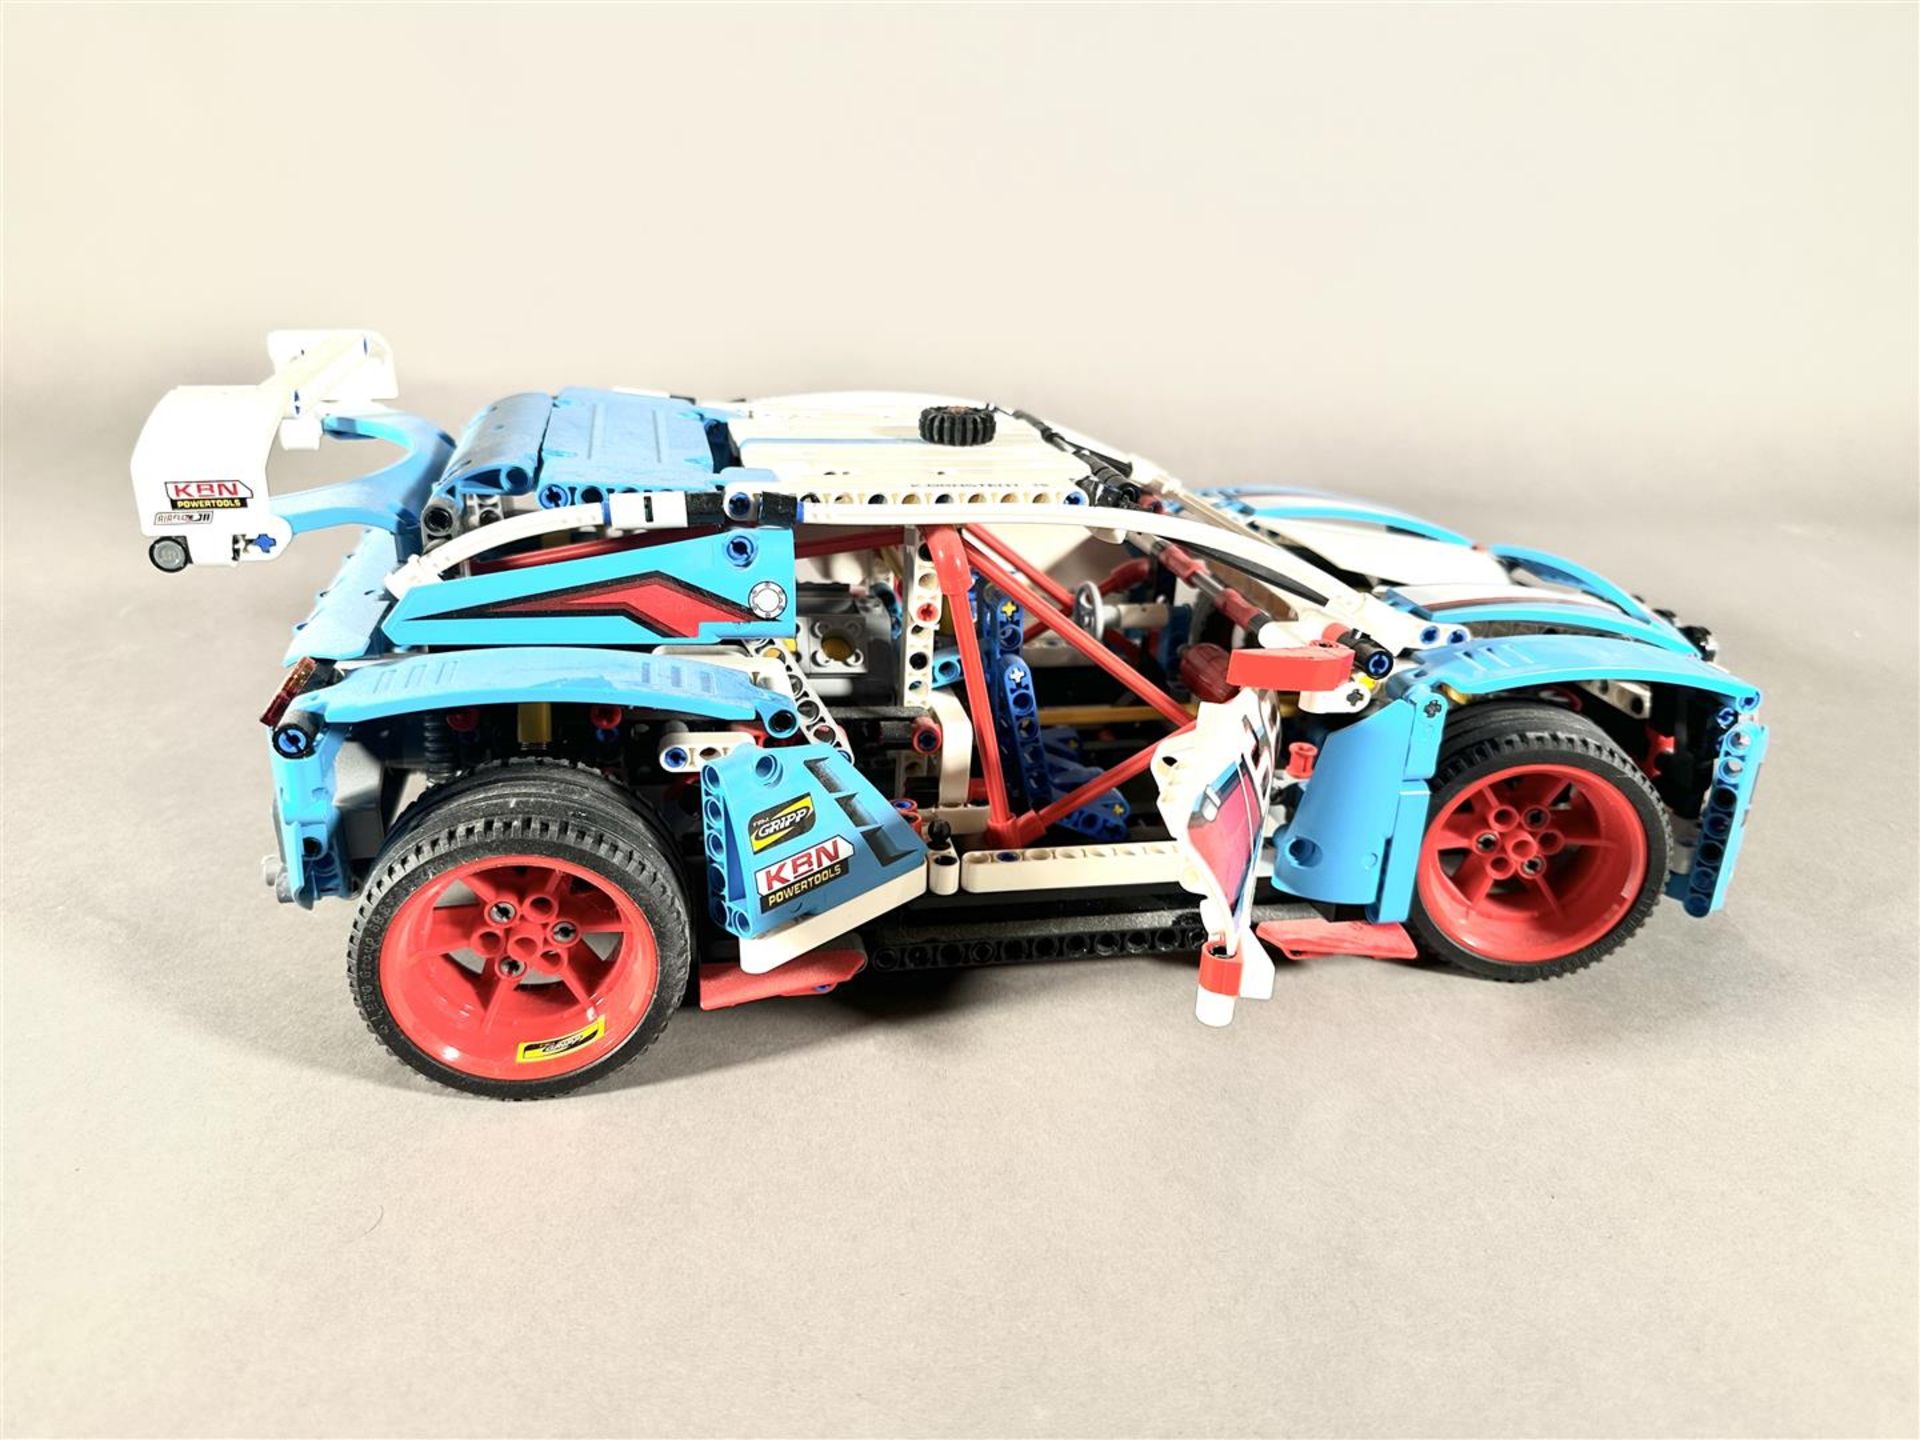 Lego - Technic - 42077 - Car rally car - 2000-present - Netherlands - Image 3 of 6